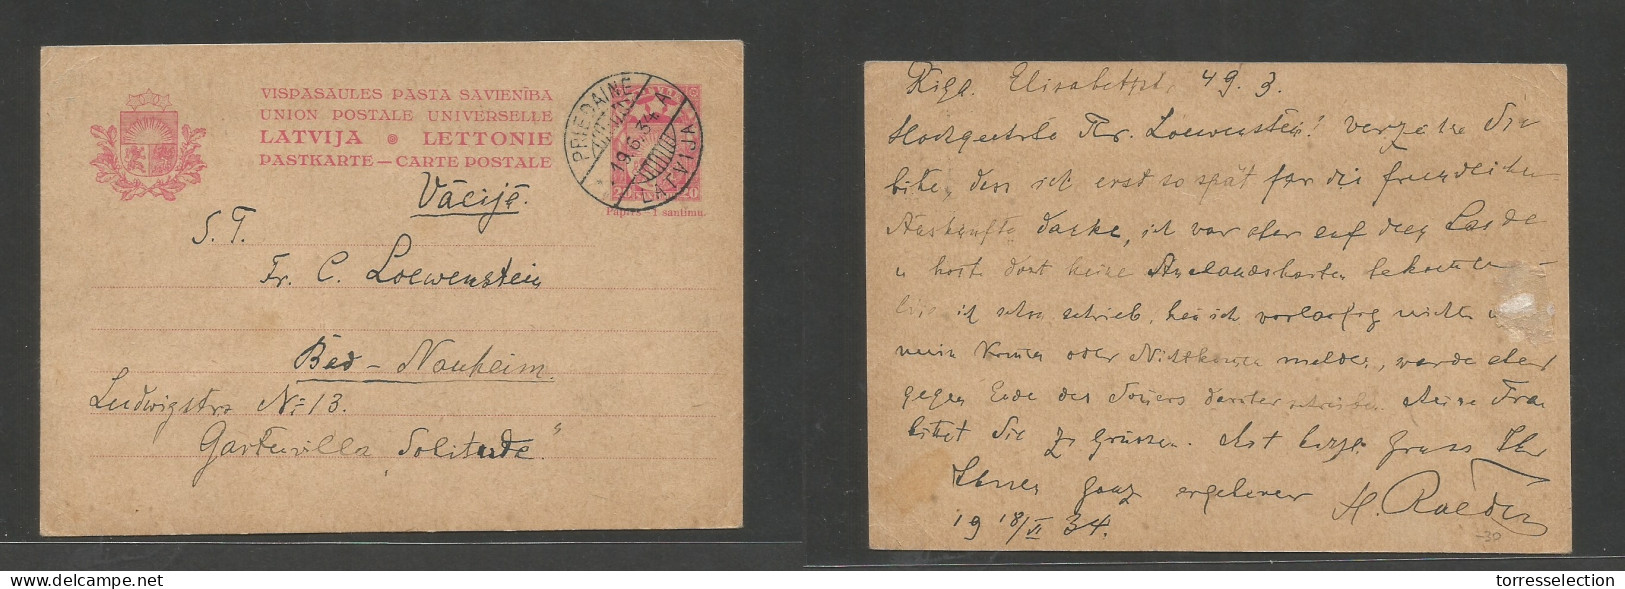 LATVIA. 1934 (19 June) Priedaine - Bed Nouheim. 20s Rose Stat Card. VF Used. SALE. - Letonia